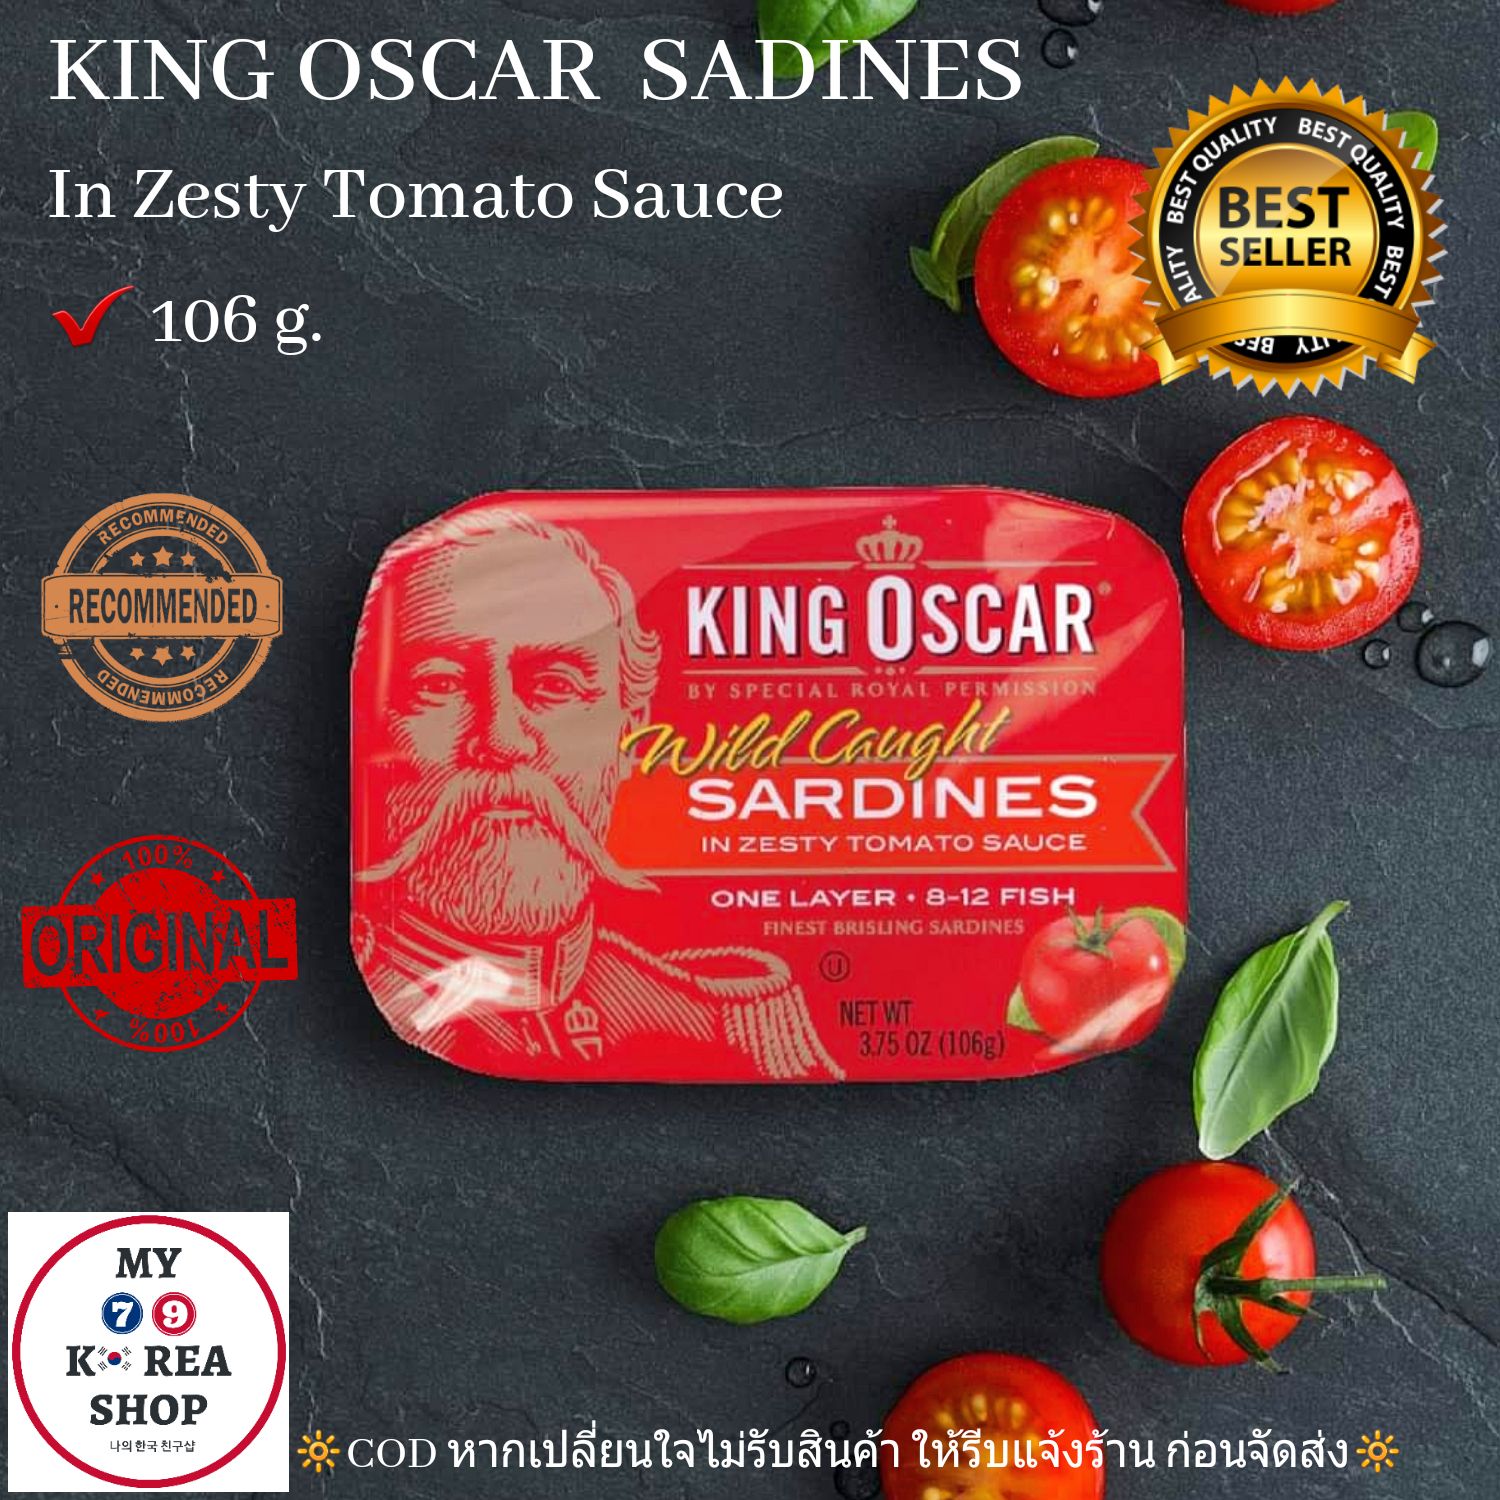 King Oscar Sardines In Zesty Tomato Sauce 106g. คิง ออสการ์ปลาซาดีน ในซอสมะเขือเทศ